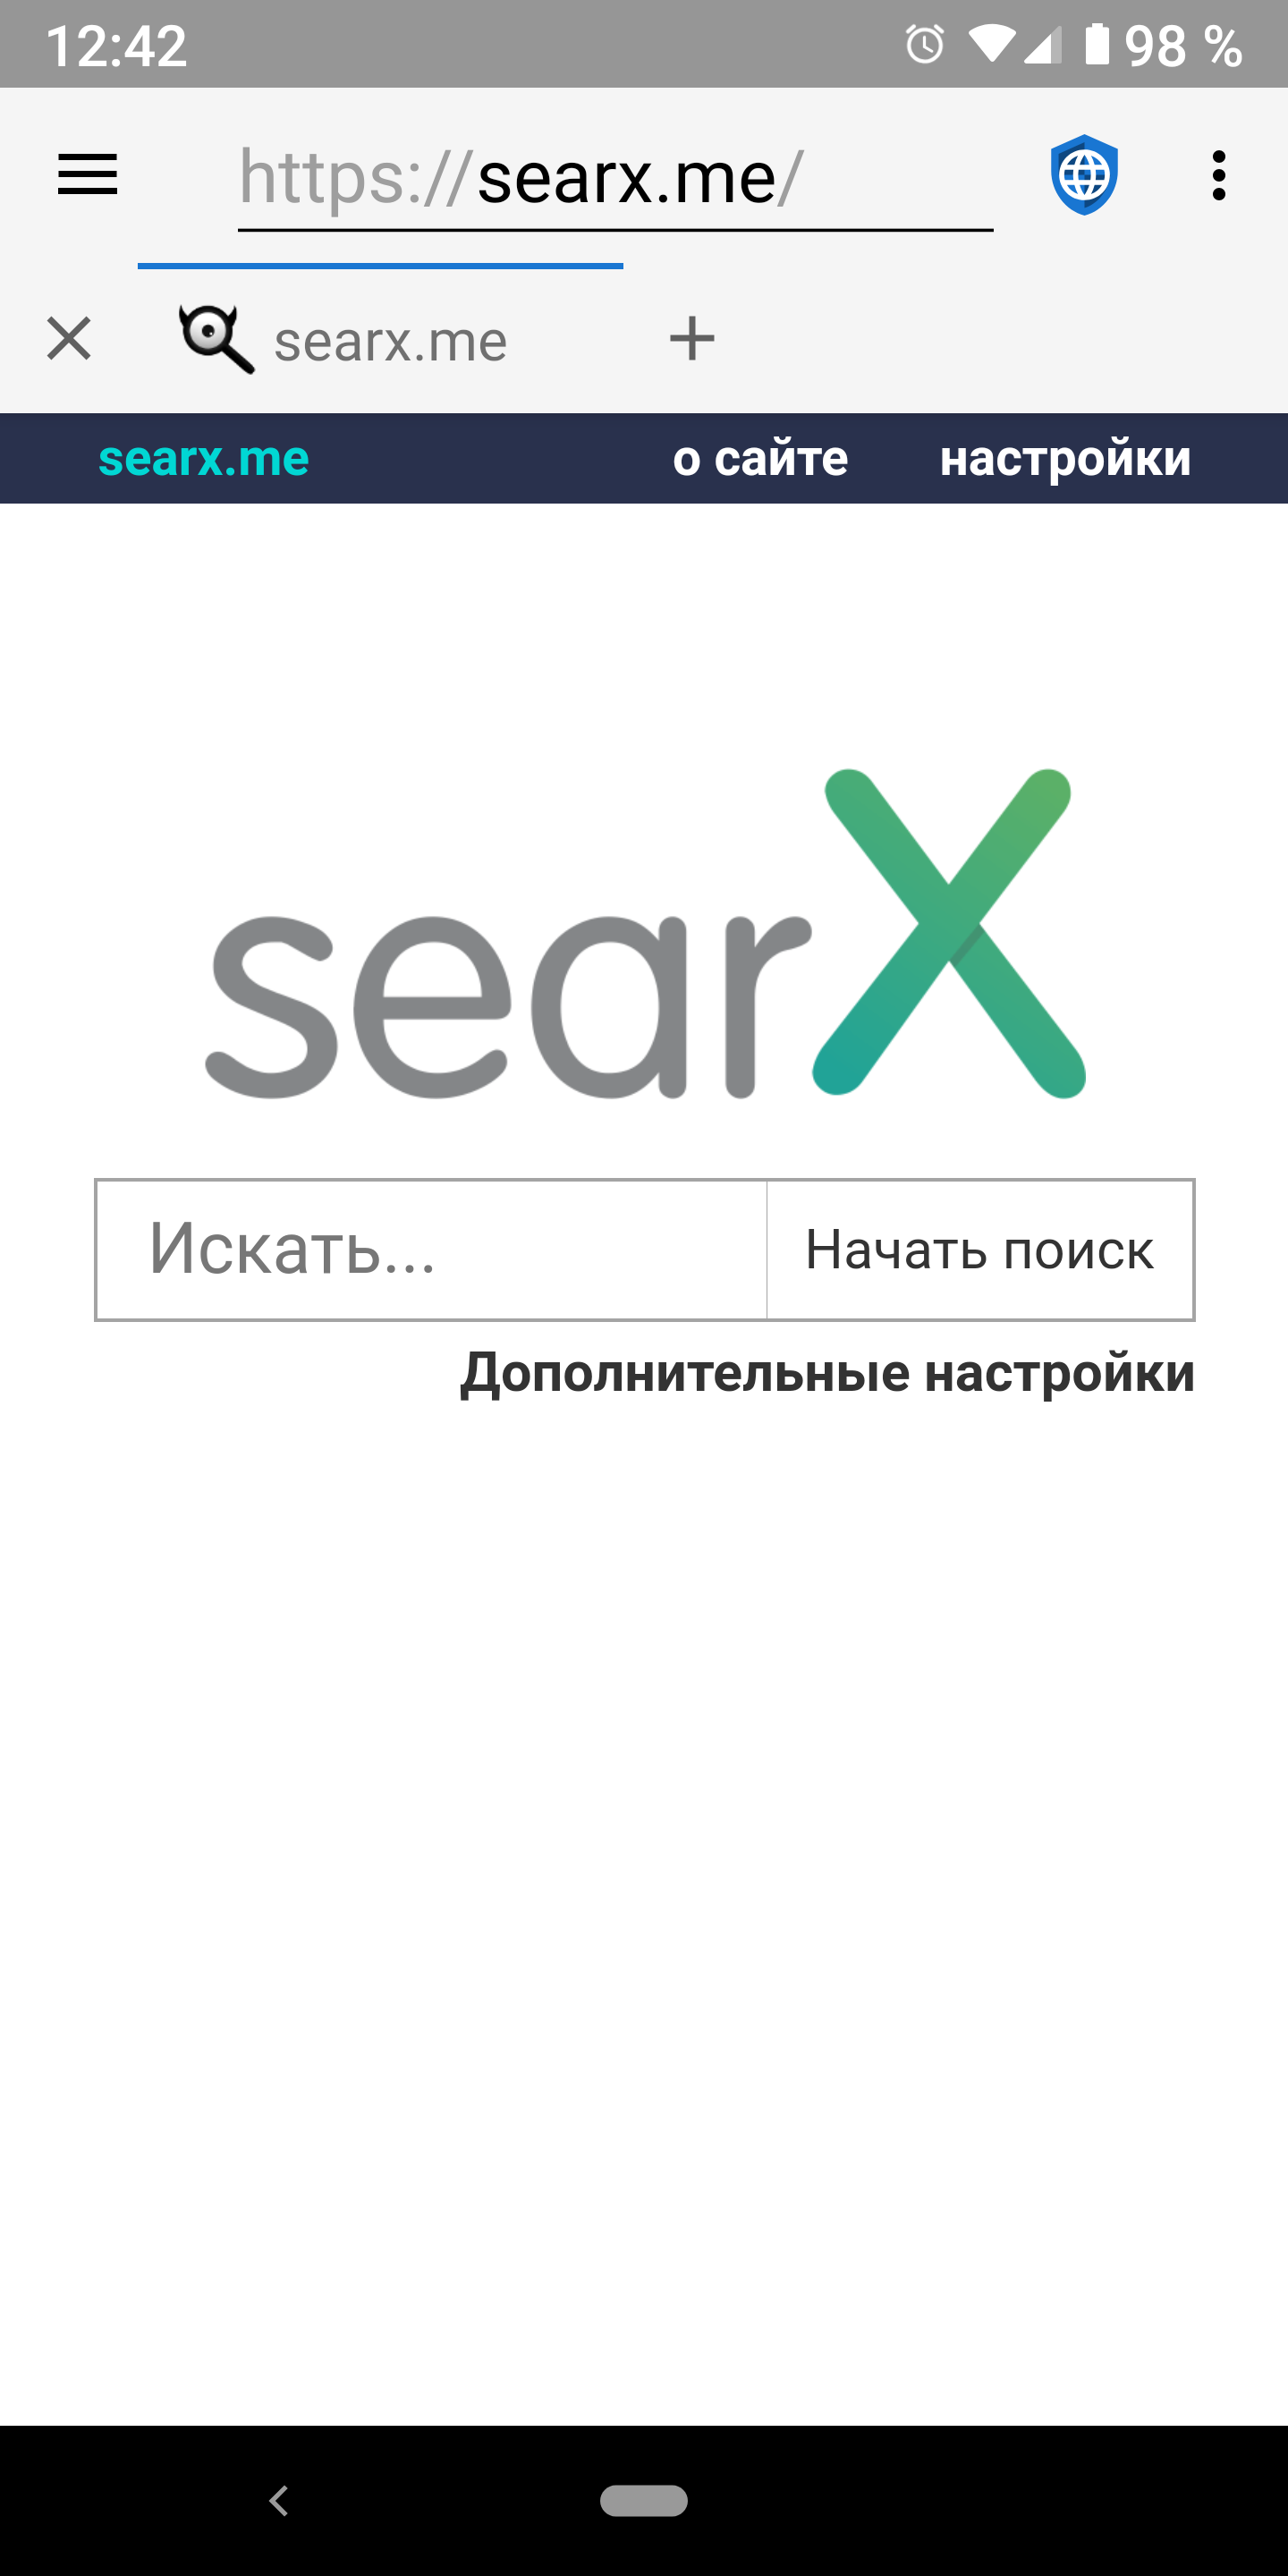 fastlane/metadata/android/ru-RU/images/phoneScreenshots/01-Homepage.png